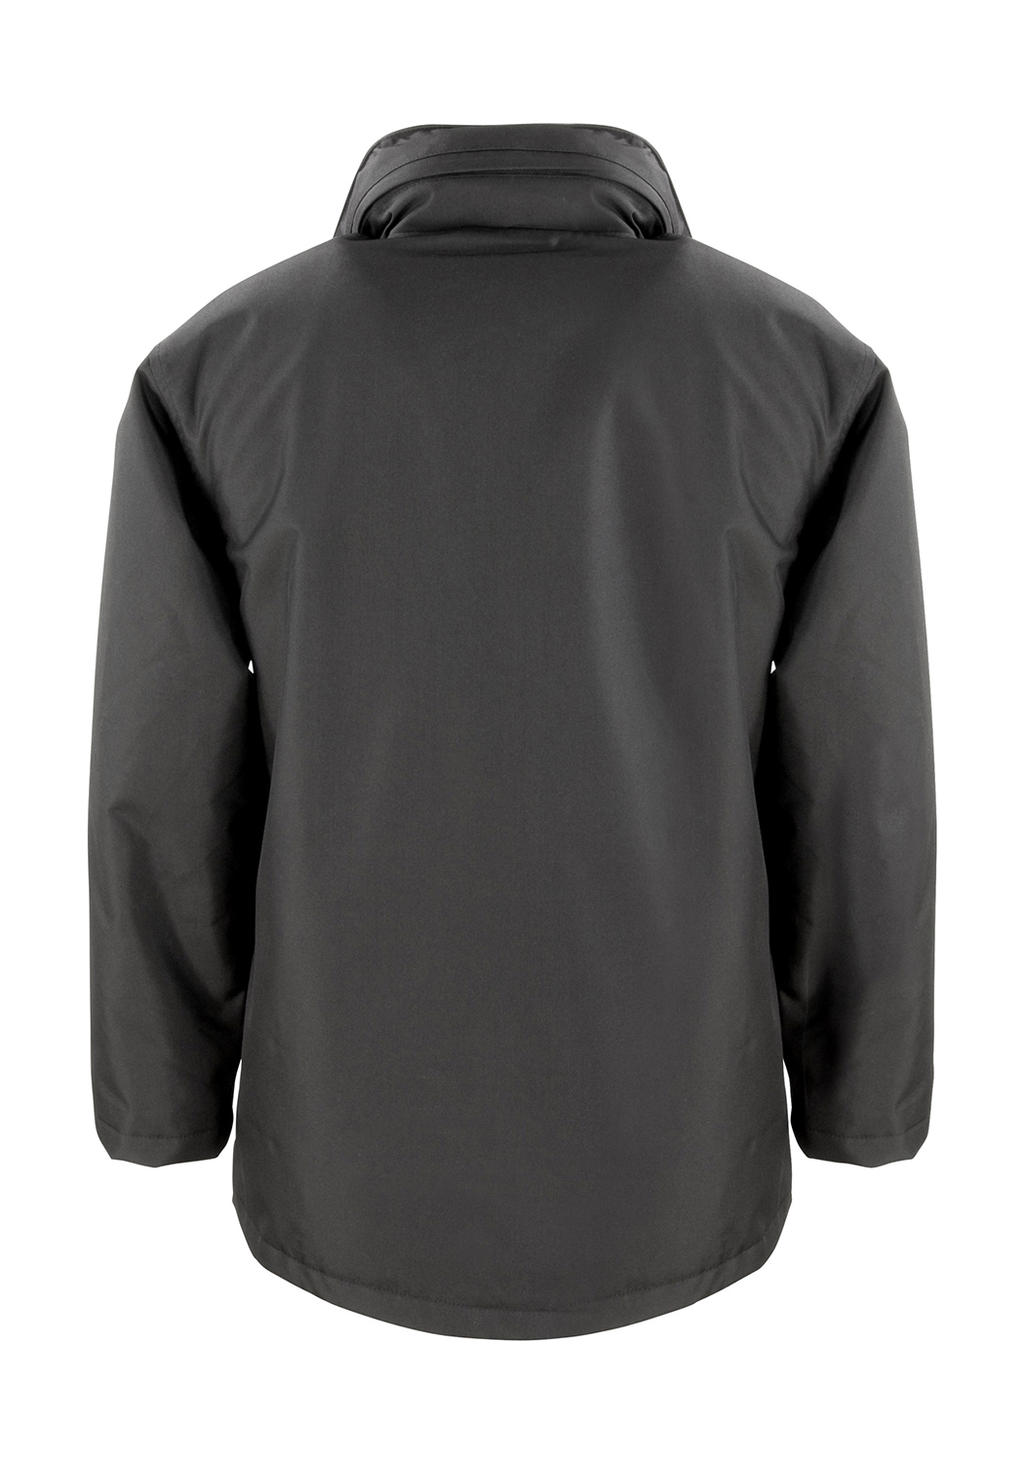  Ladies Platinum Managers Jacket in Farbe Black